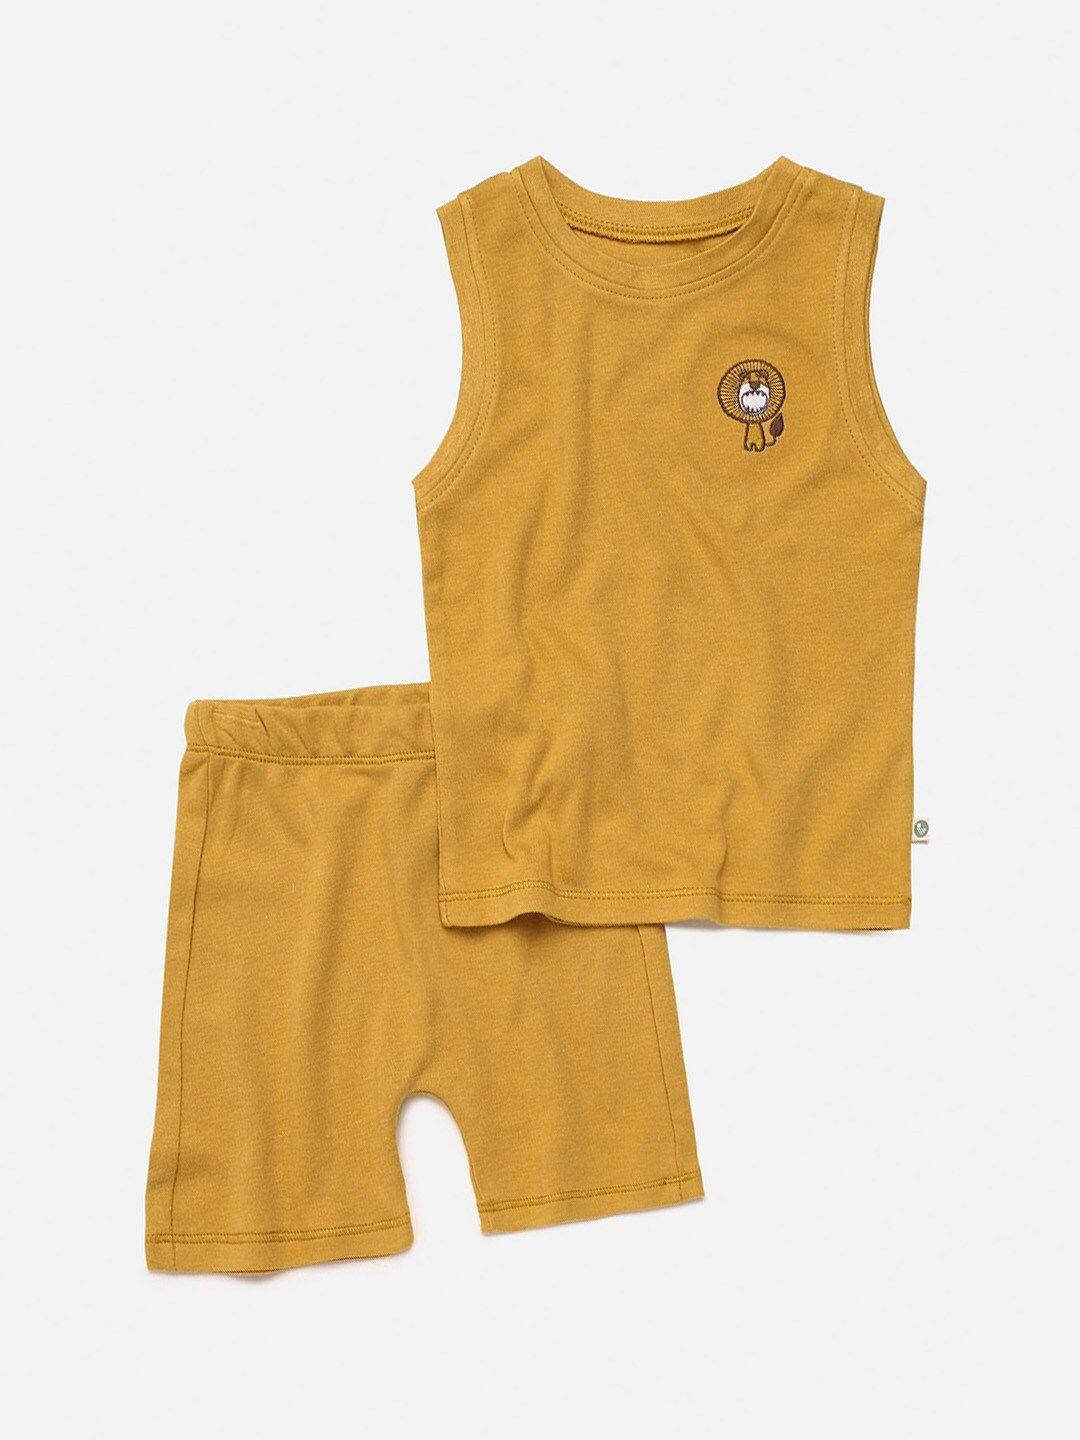 cocoon-care-unisex-kids-mustard-sustainable-clothing-set